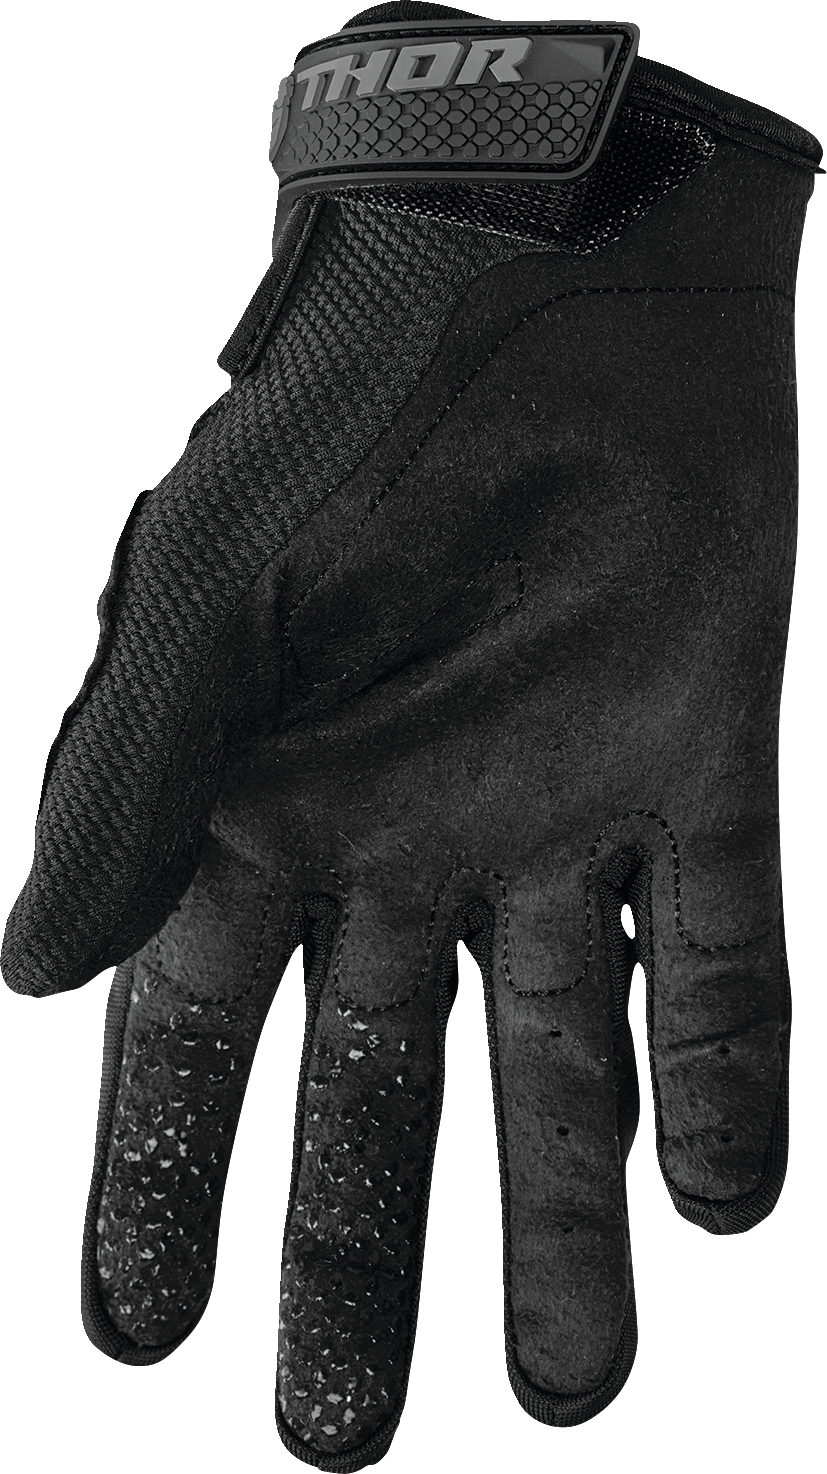 THOR Women's Sector Gloves - Black/Gray - Medium 3331-0239